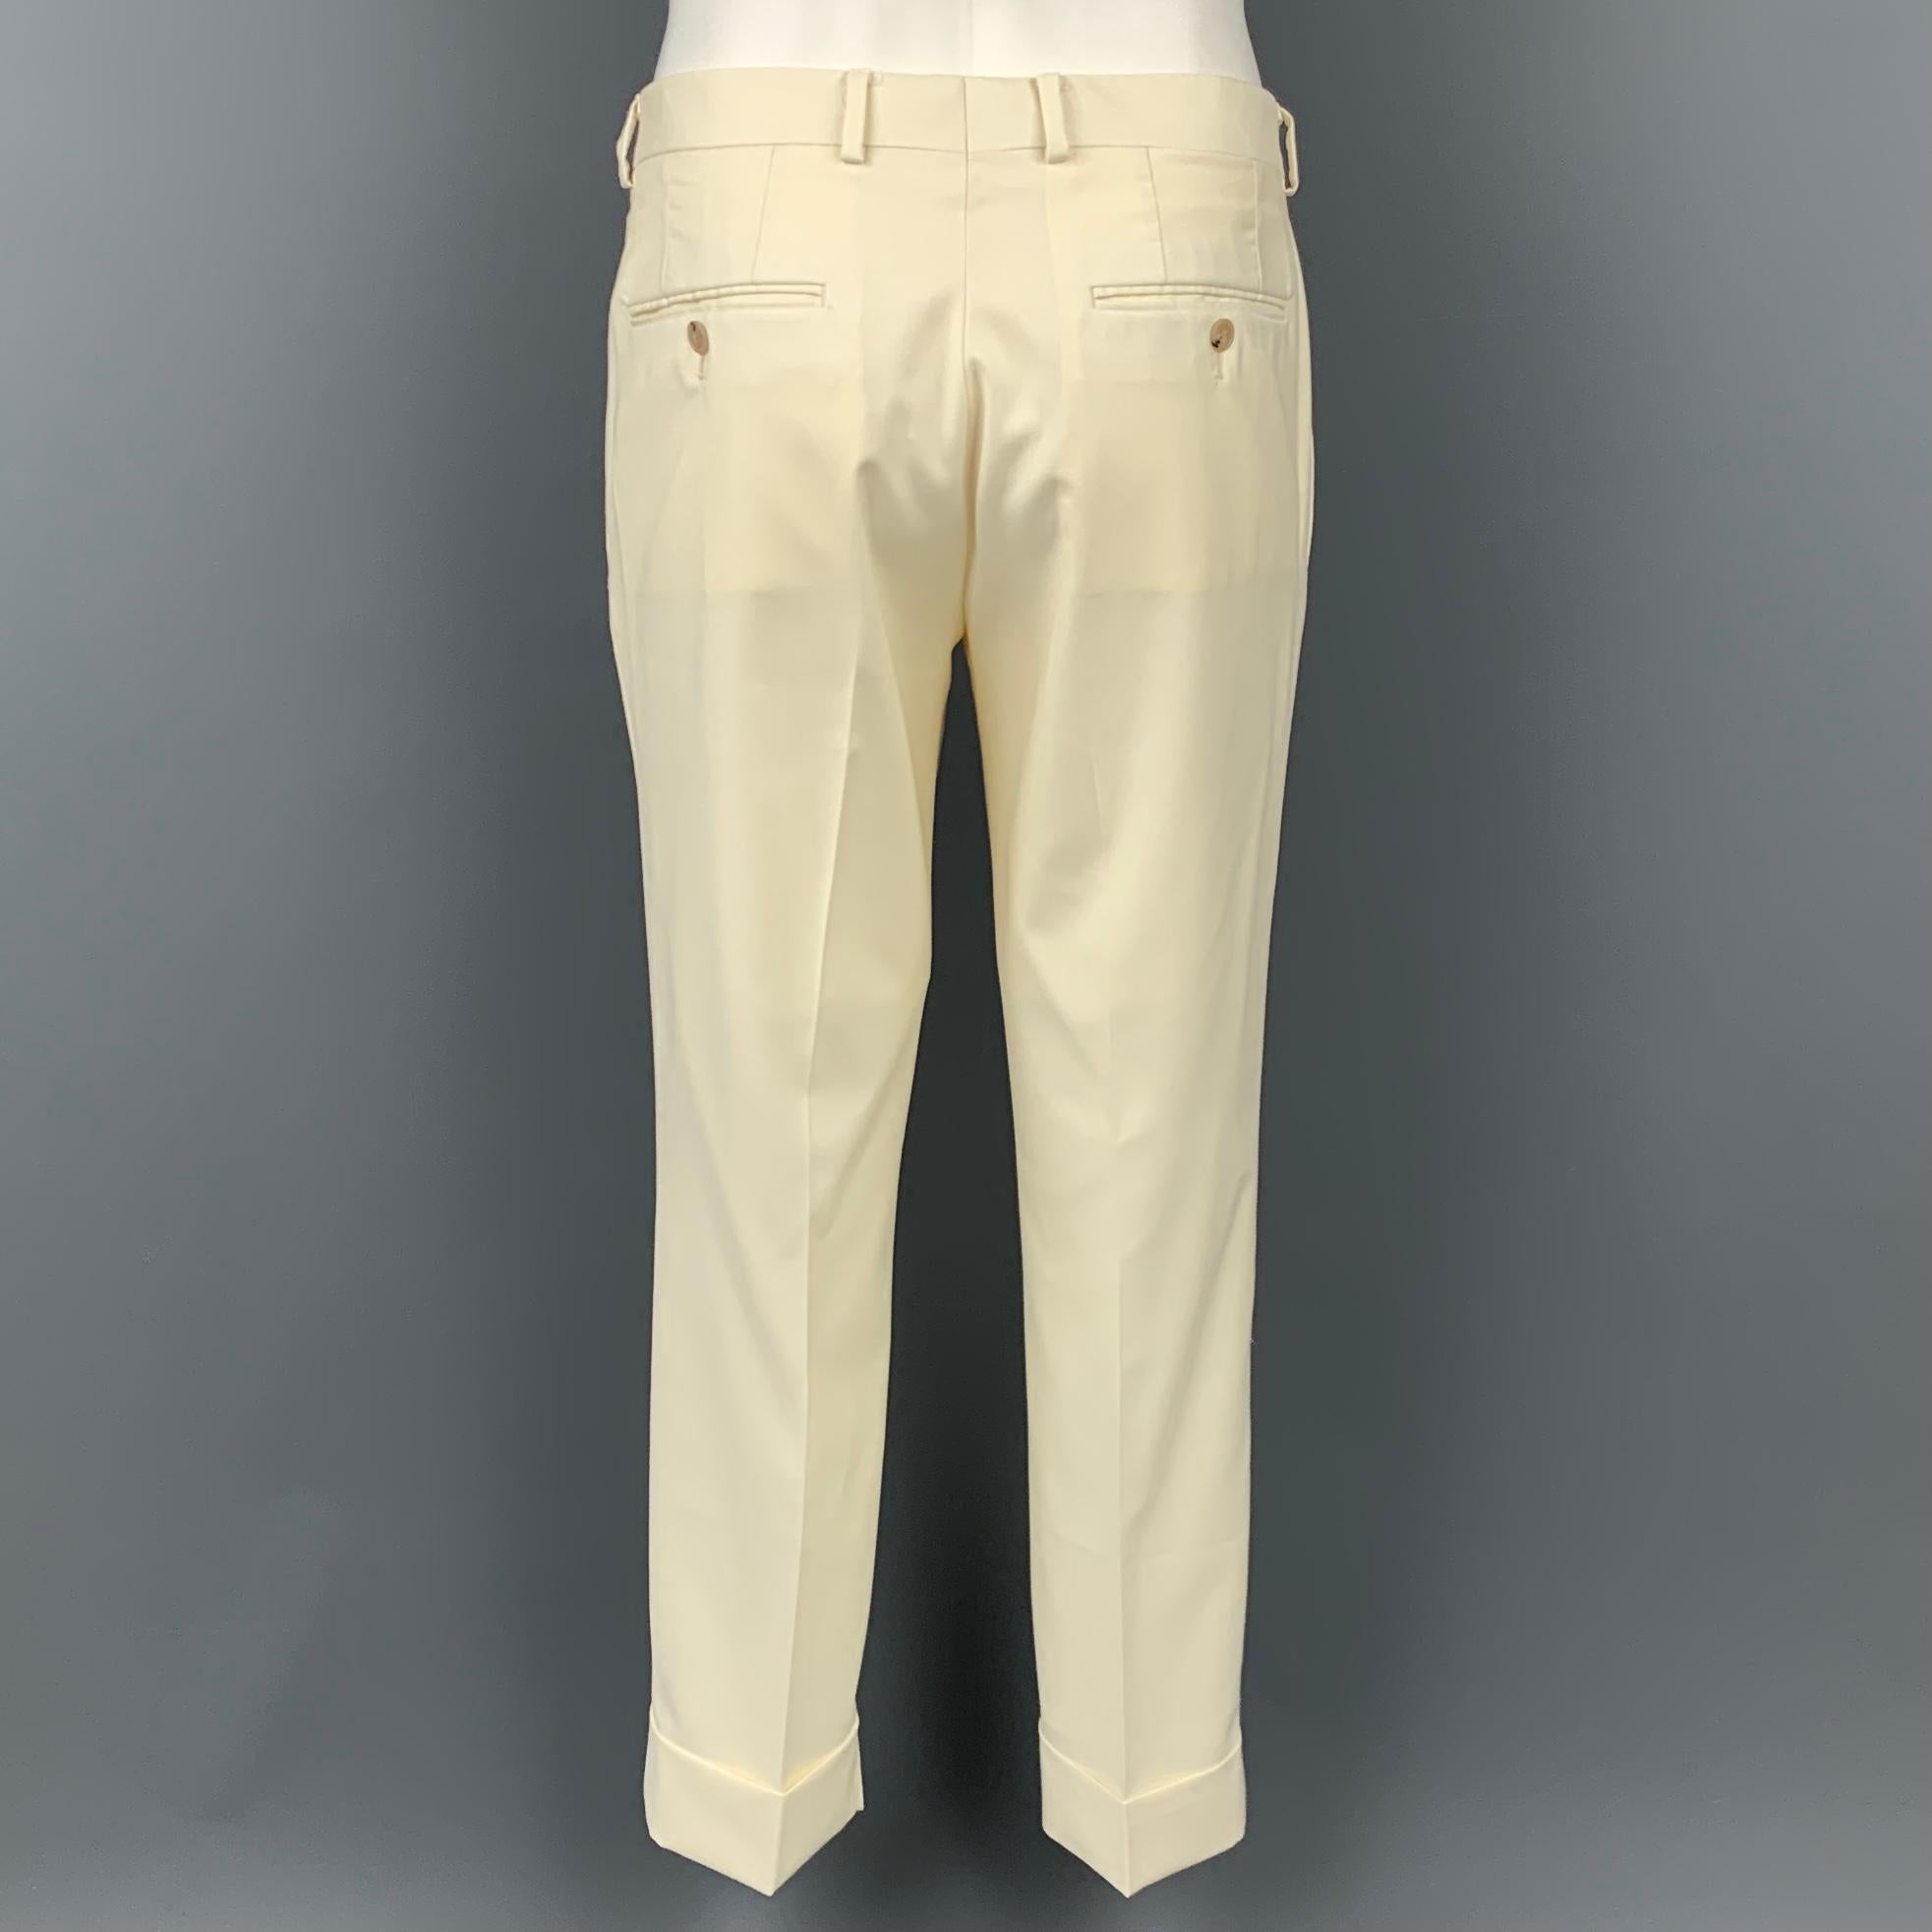 Beige SAMUELSOHN for WILKES BASHFORD Size 38 Regular Cream Solid Wool Peak Lapel Suit